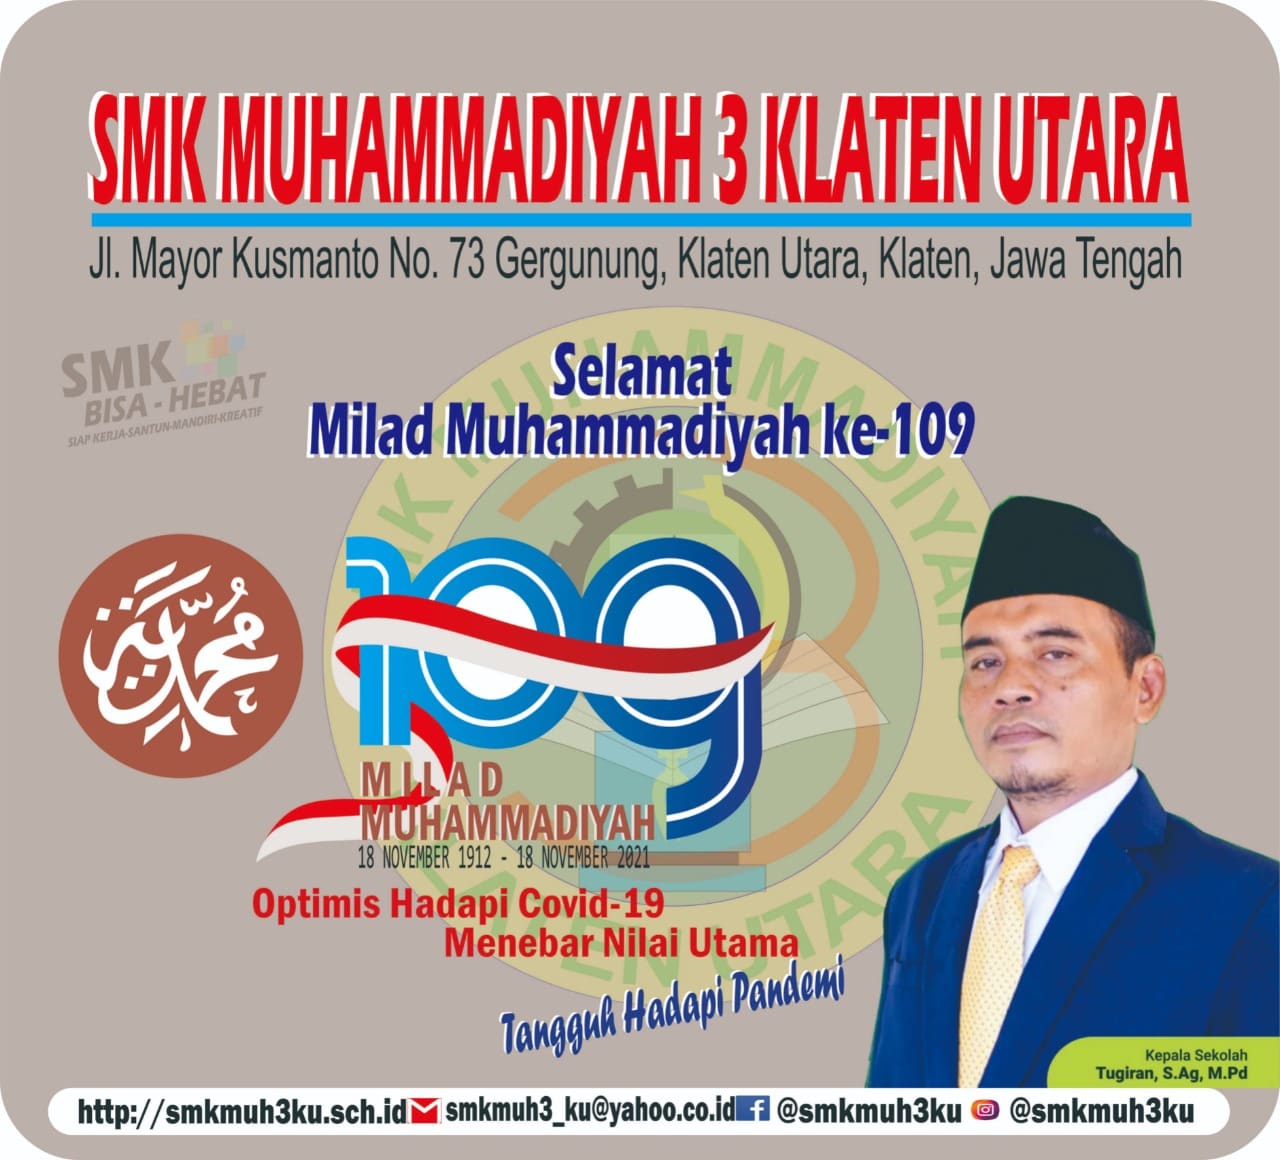 Selamat Milad Muhammadiyah